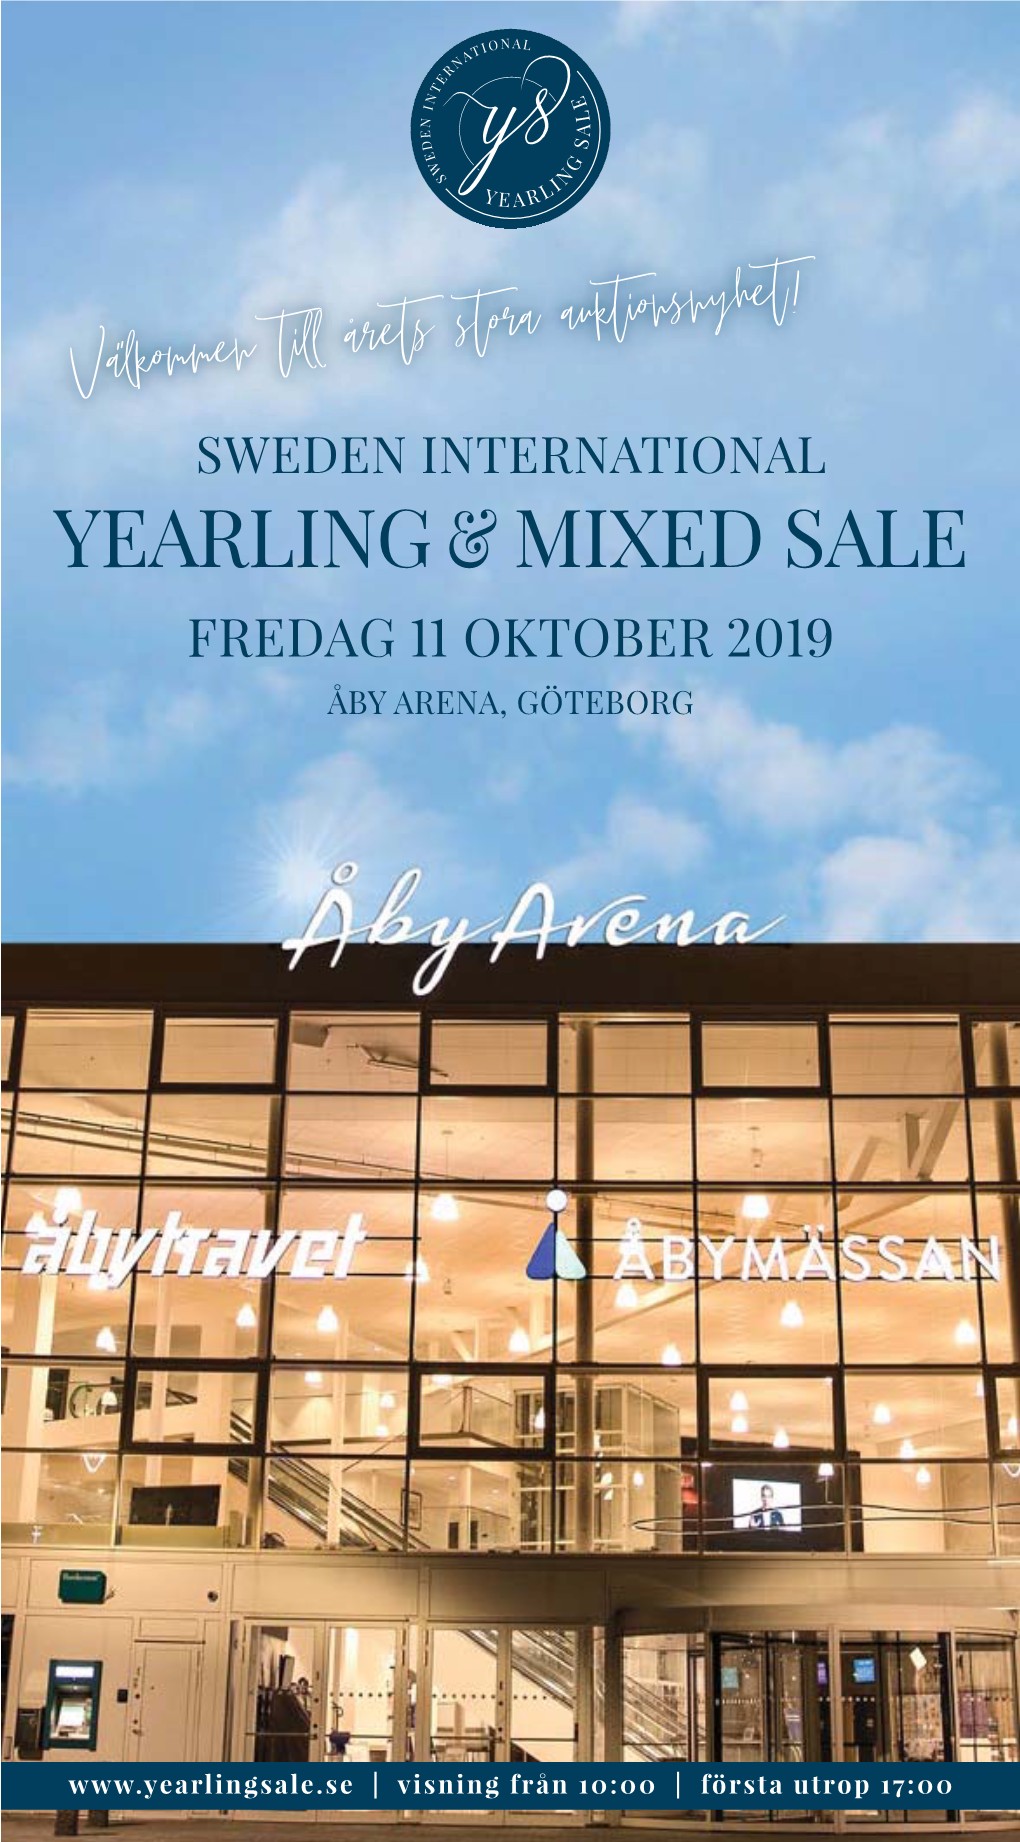 Valkommen Till Arets Stora Auktionsnyhet! SWEDEN INTERNATIONAL YEARLING & MIXED SALE FREDAG 11 OKTOBER 2019 ÅBY ARENA, GÖTEBORG